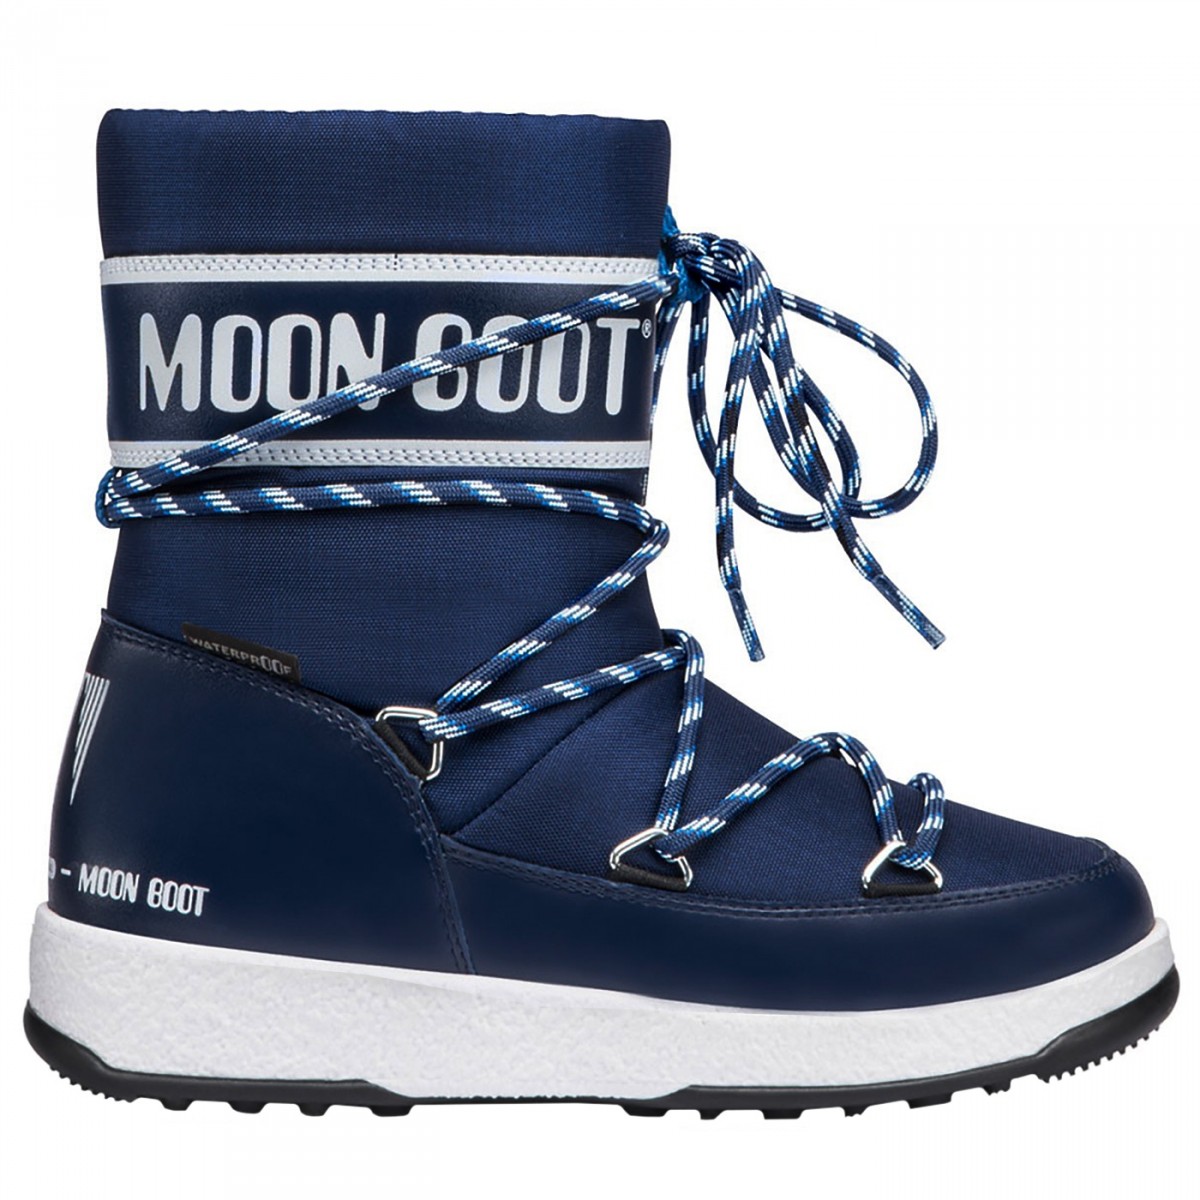 Doposci Moon Boot W.E. Sport Jr Wp Junior blu-bianco (Colore: blu-bianco, Taglia: 30)